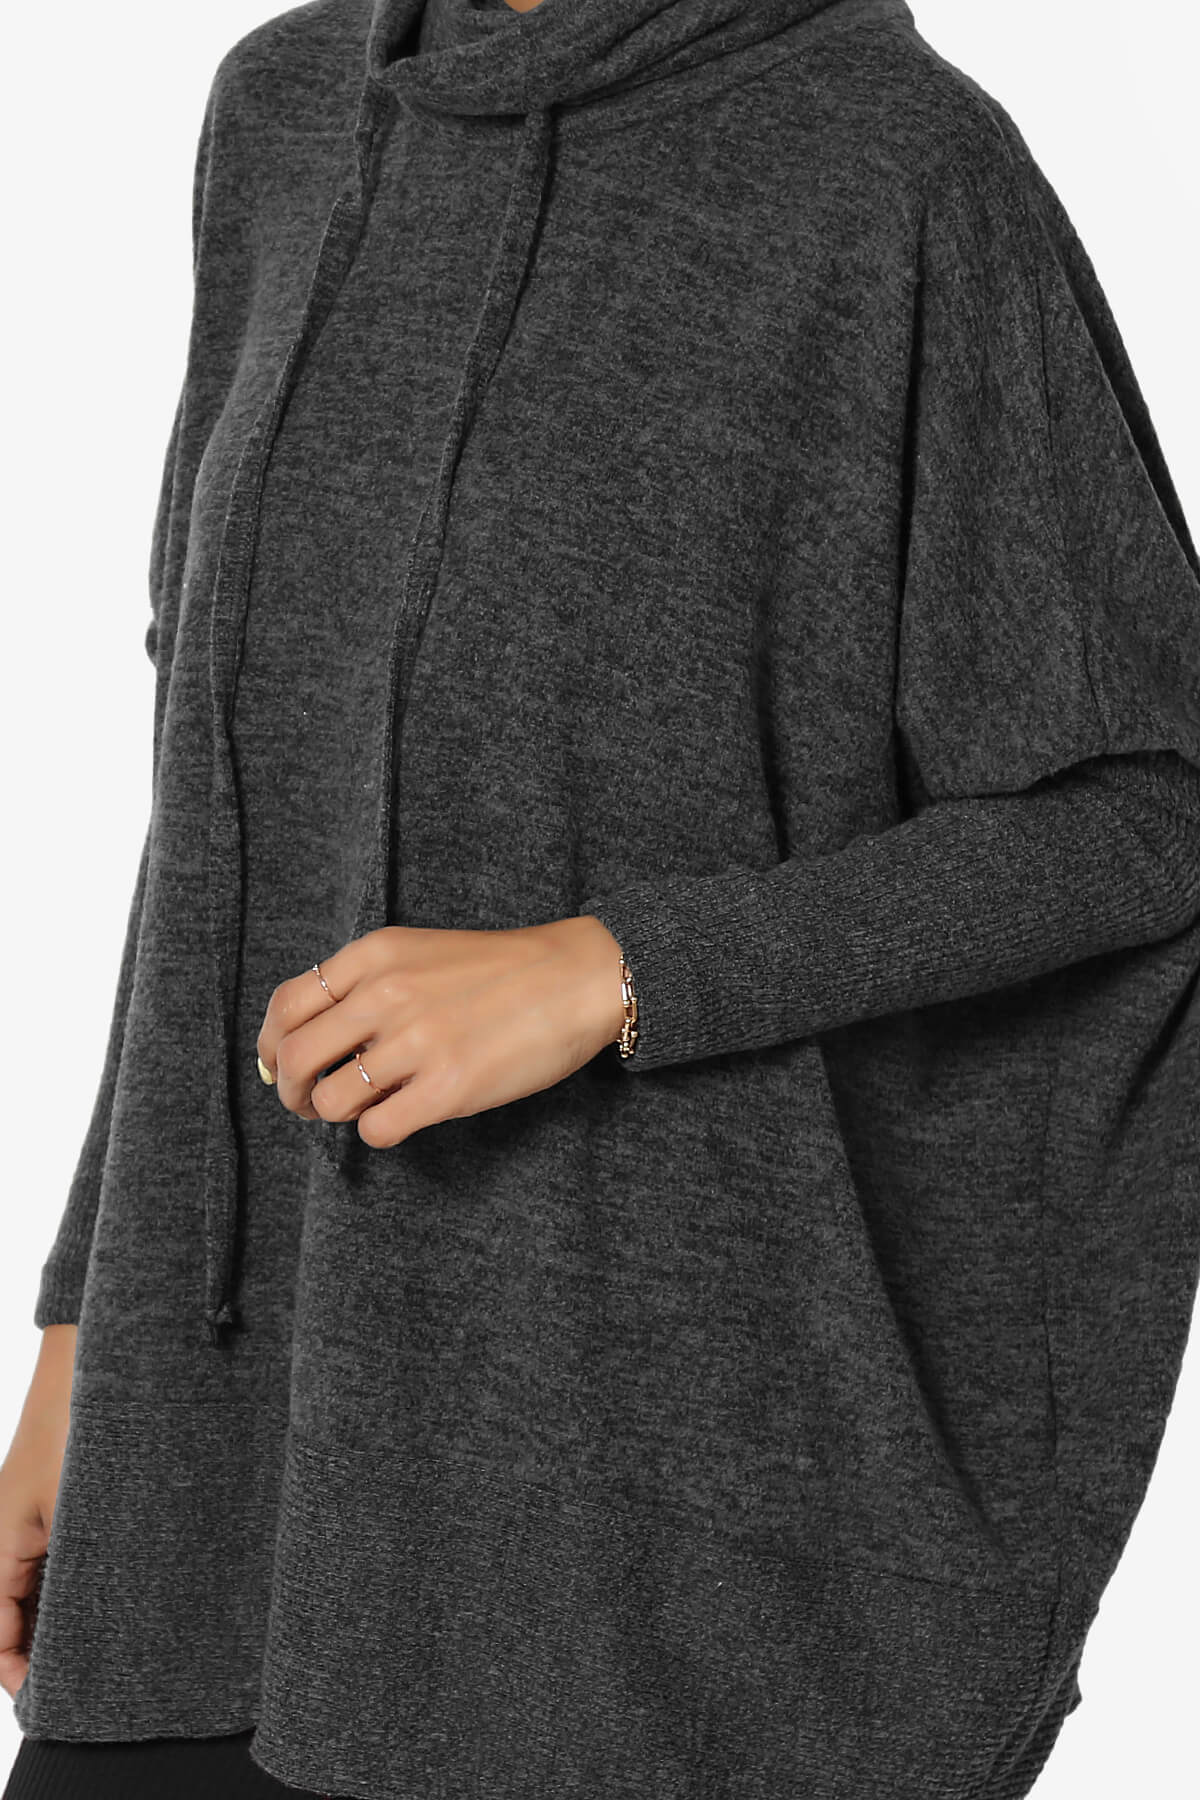 Barclay Cowl Neck Melange Knit Oversized Sweater